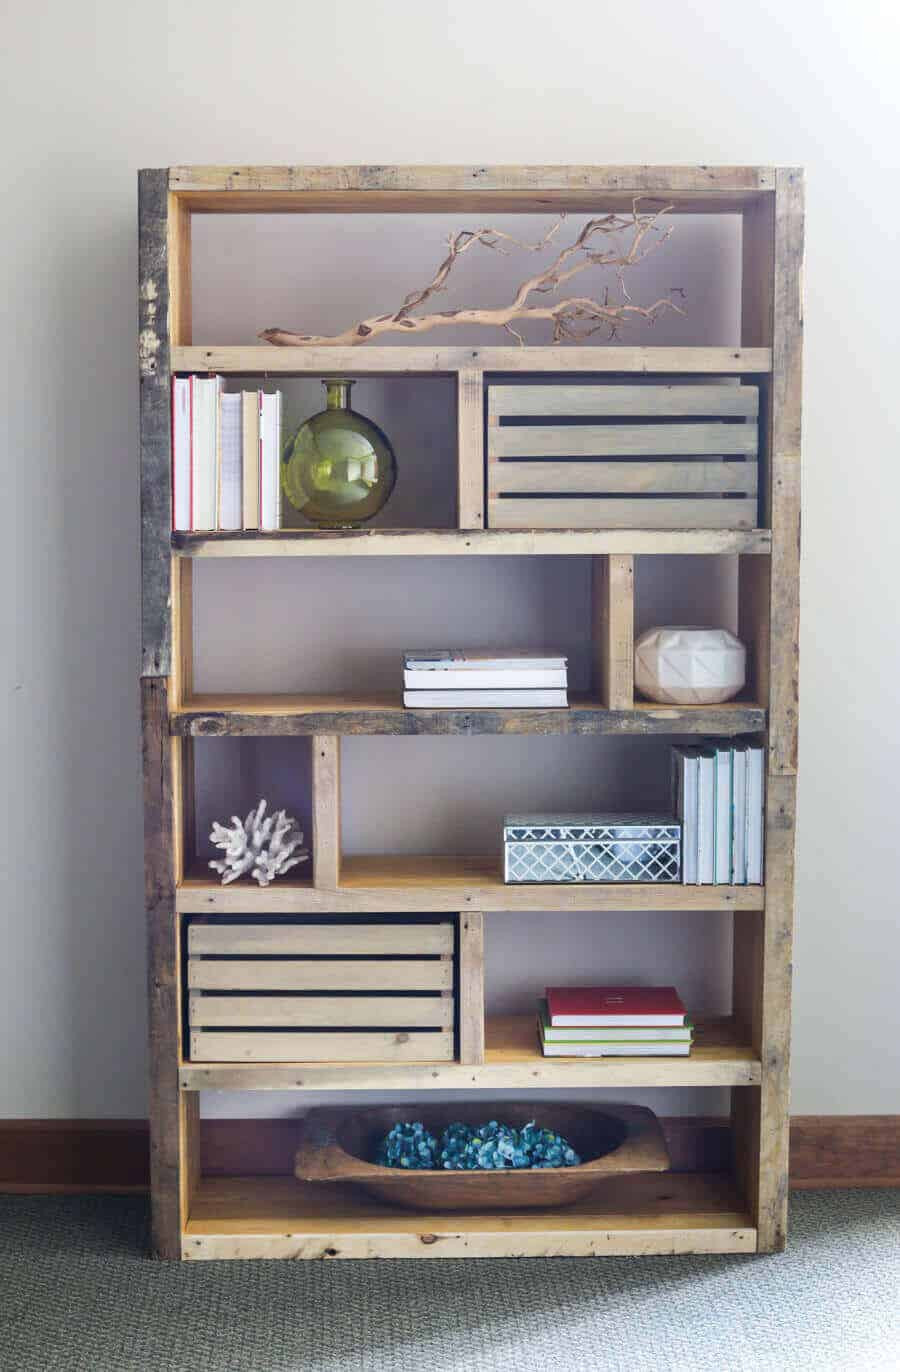 DIY Wooden Pallet Shelves
 33 Diy Pallet Shelves You’ll Want to Build to Get more